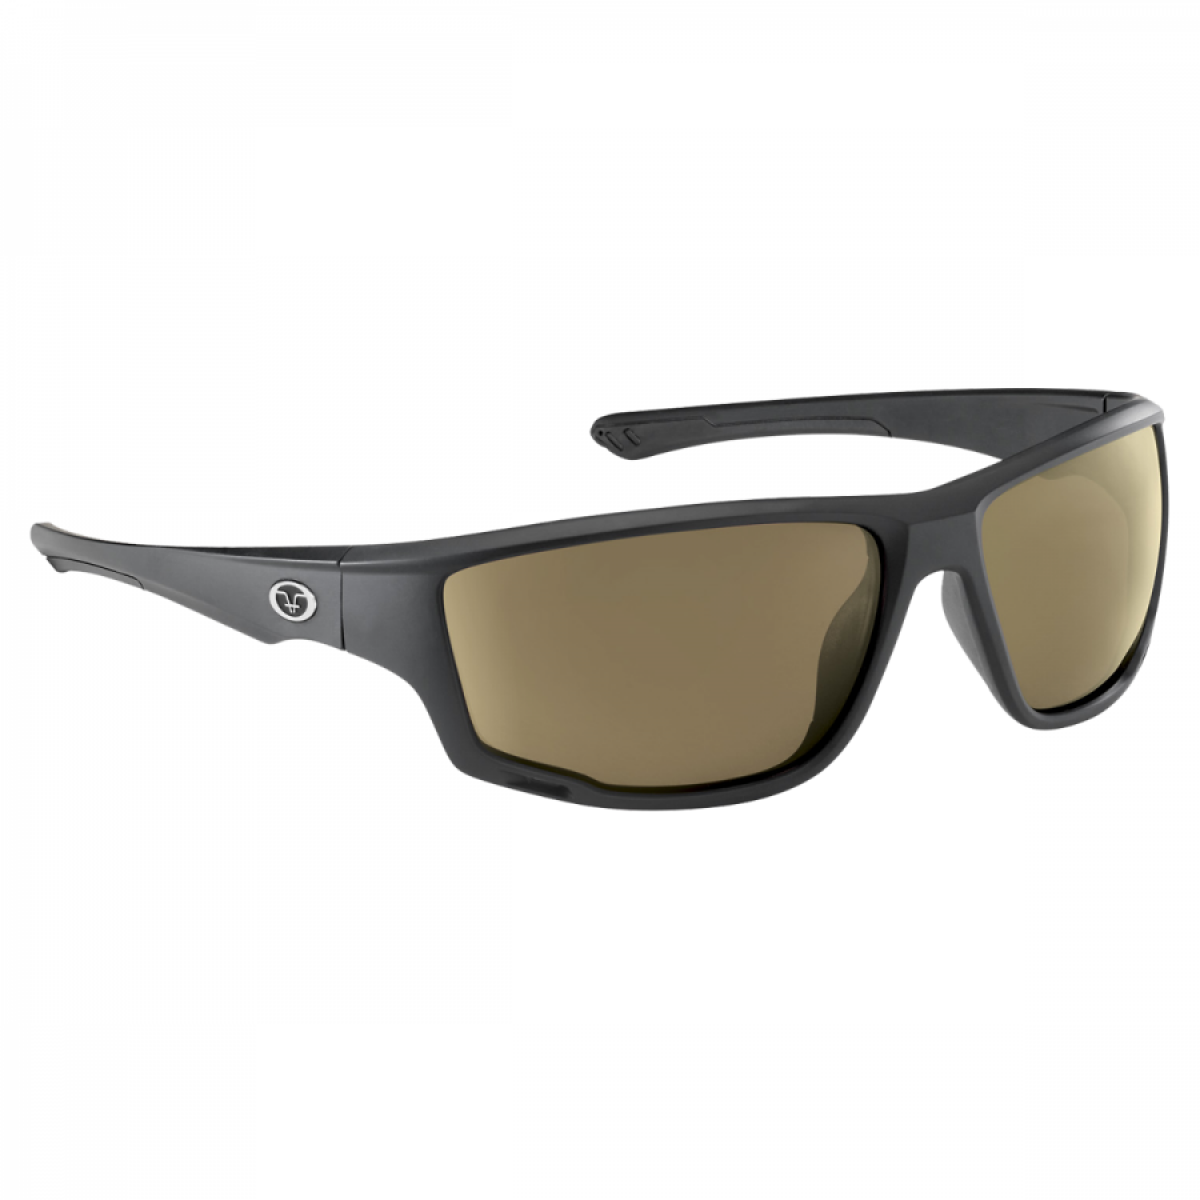 Flying Fisherman Solstice Polarized Sunglasses Amber-Green - Sportsman Gear